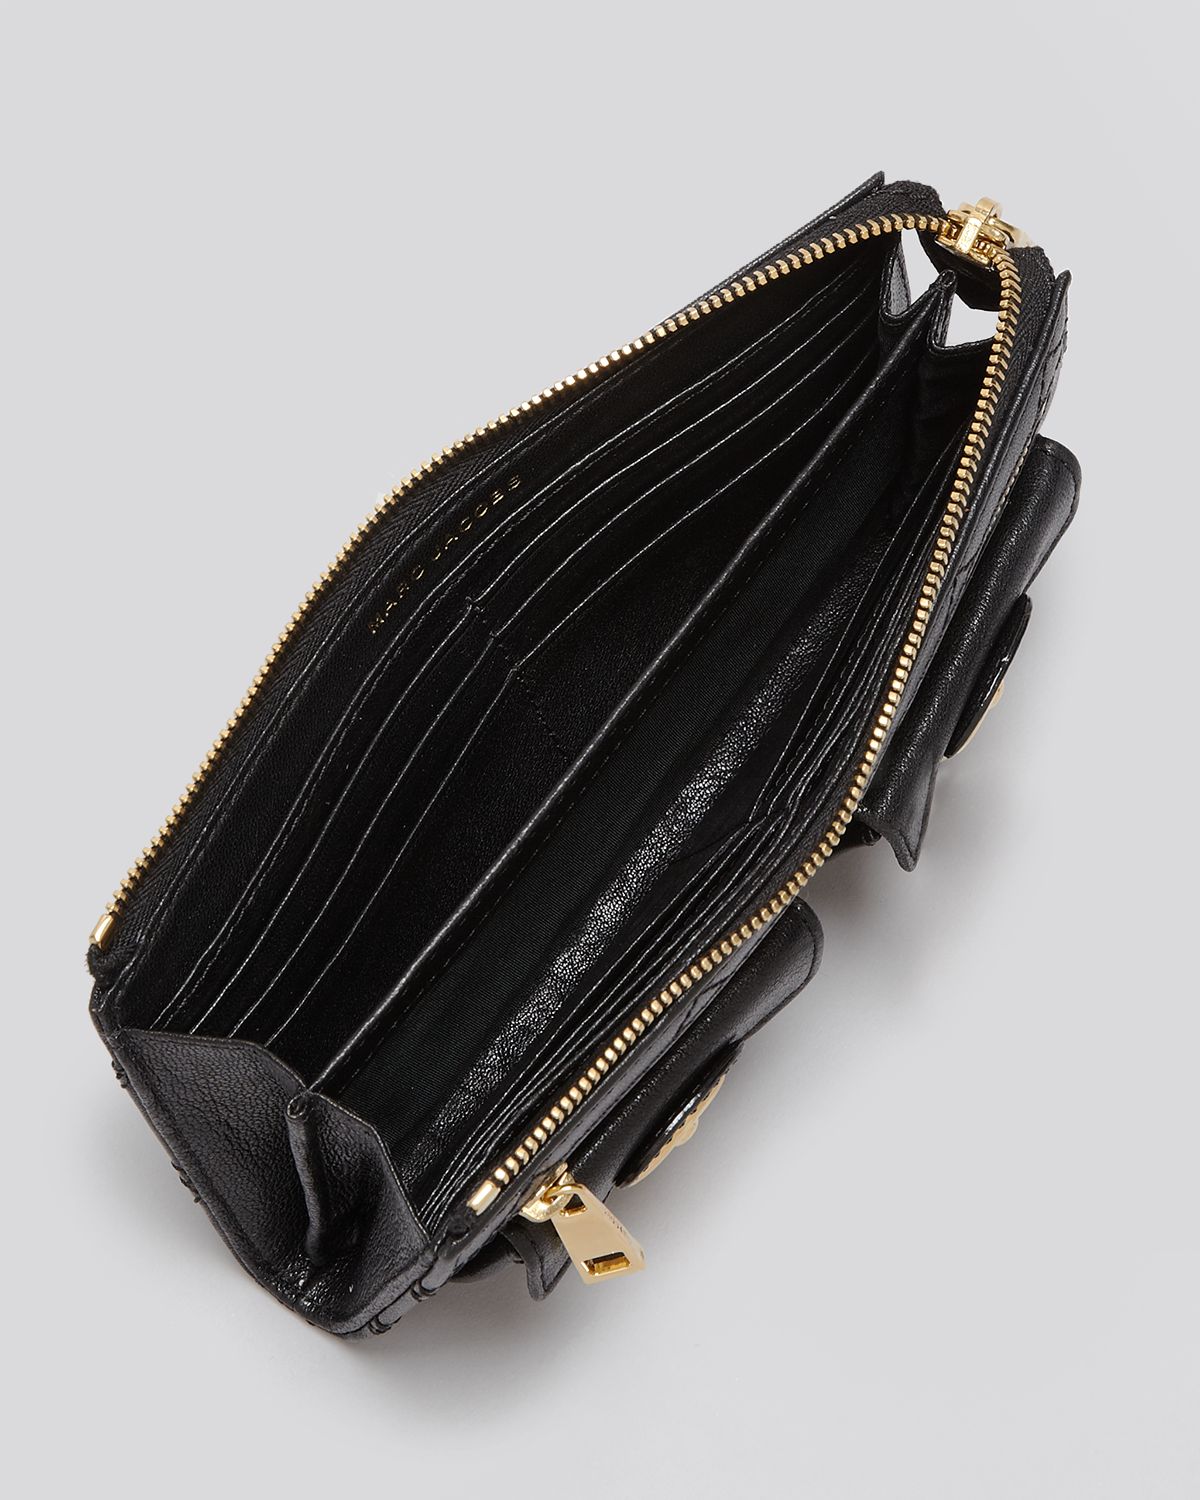 Marc Jacobs Quilted Zip Clutch Wallet in Black/Brass (Black) | Lyst